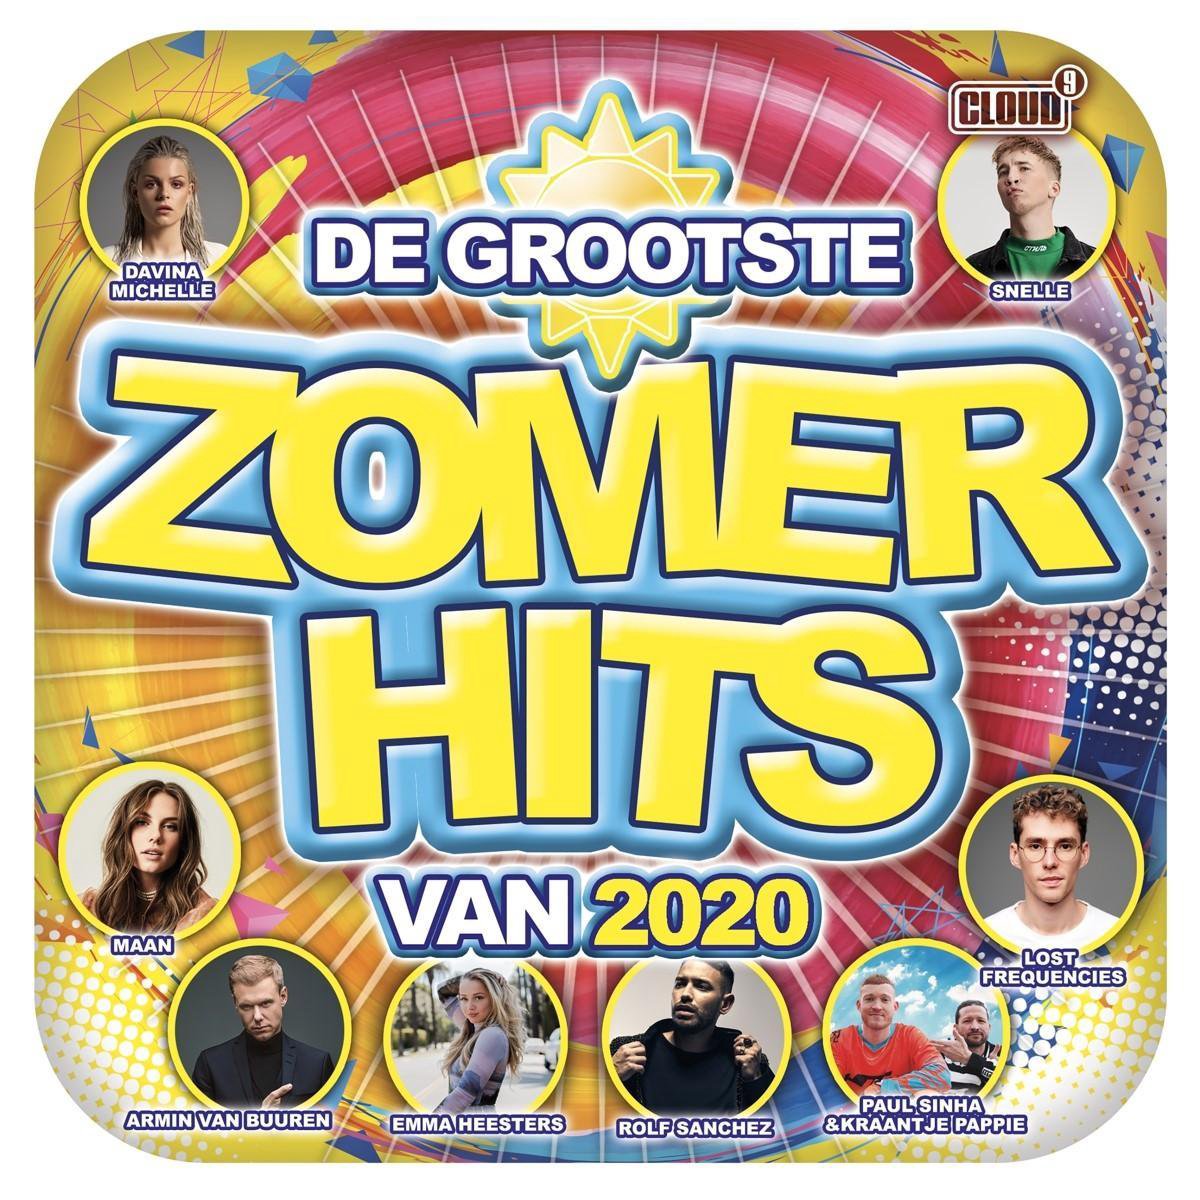 Various Artists - De Grootste Zomerhits Van 2020 (2 CD) - various artists